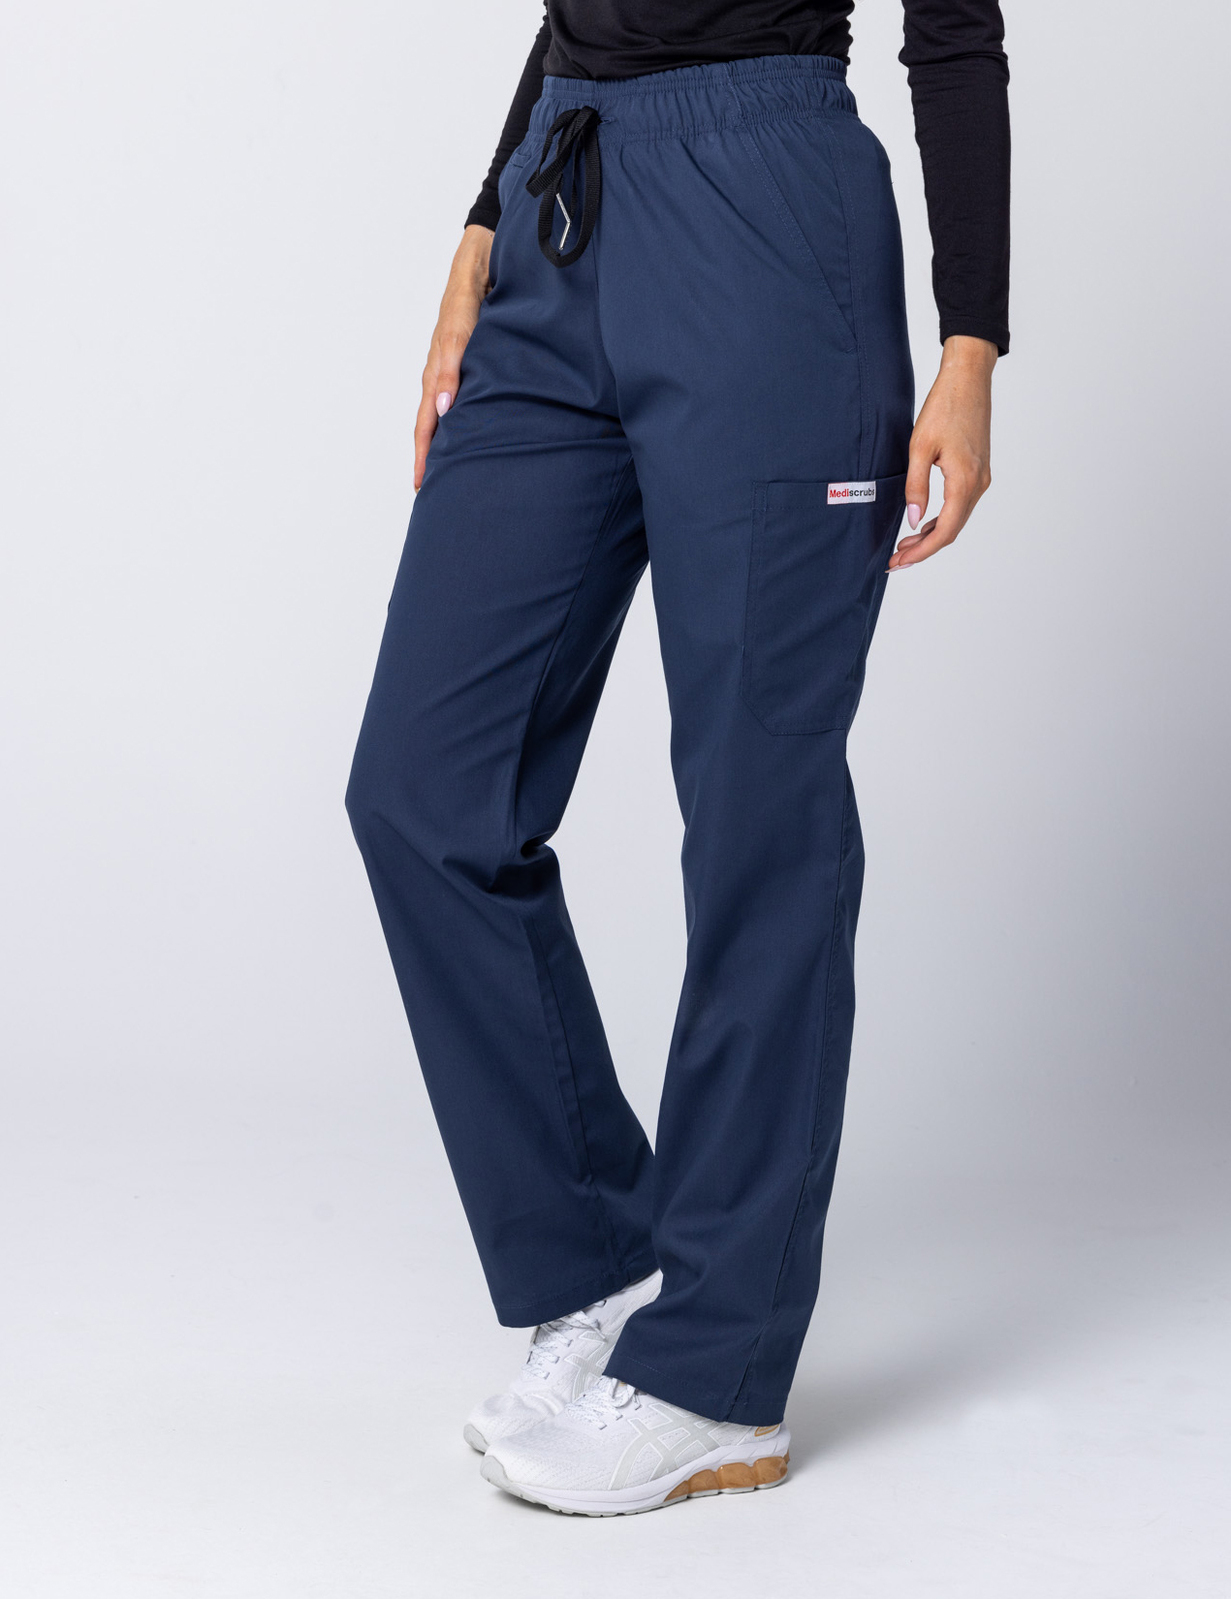 Women's Cargo Performance Pants - Navy - Large